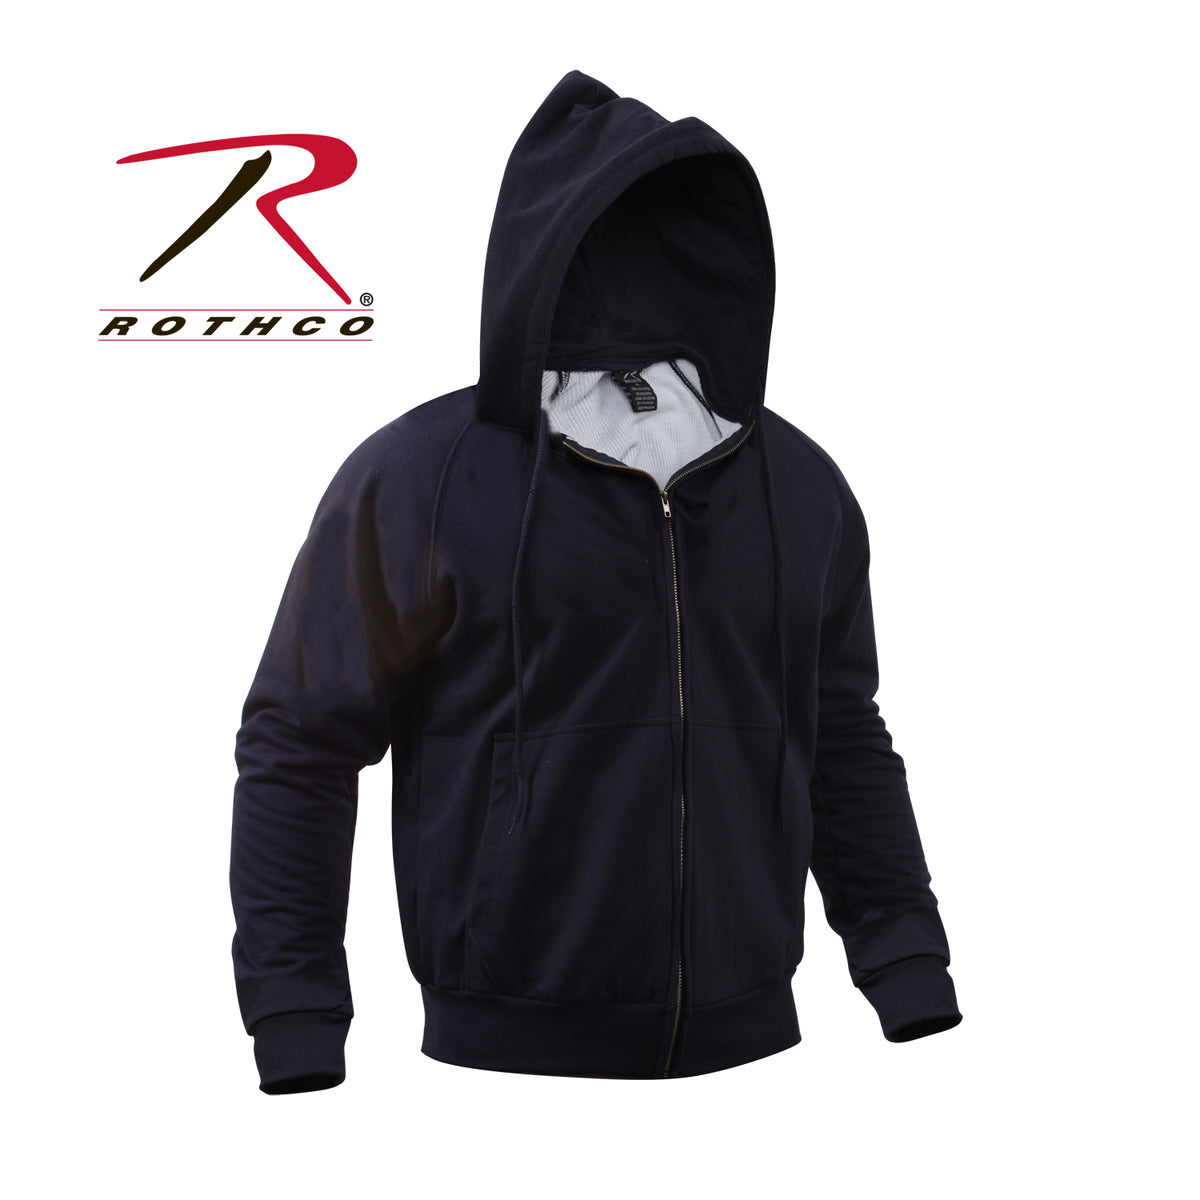 Thermal Lined Hooded Sweatshirt - Black, Woodland or NAVY